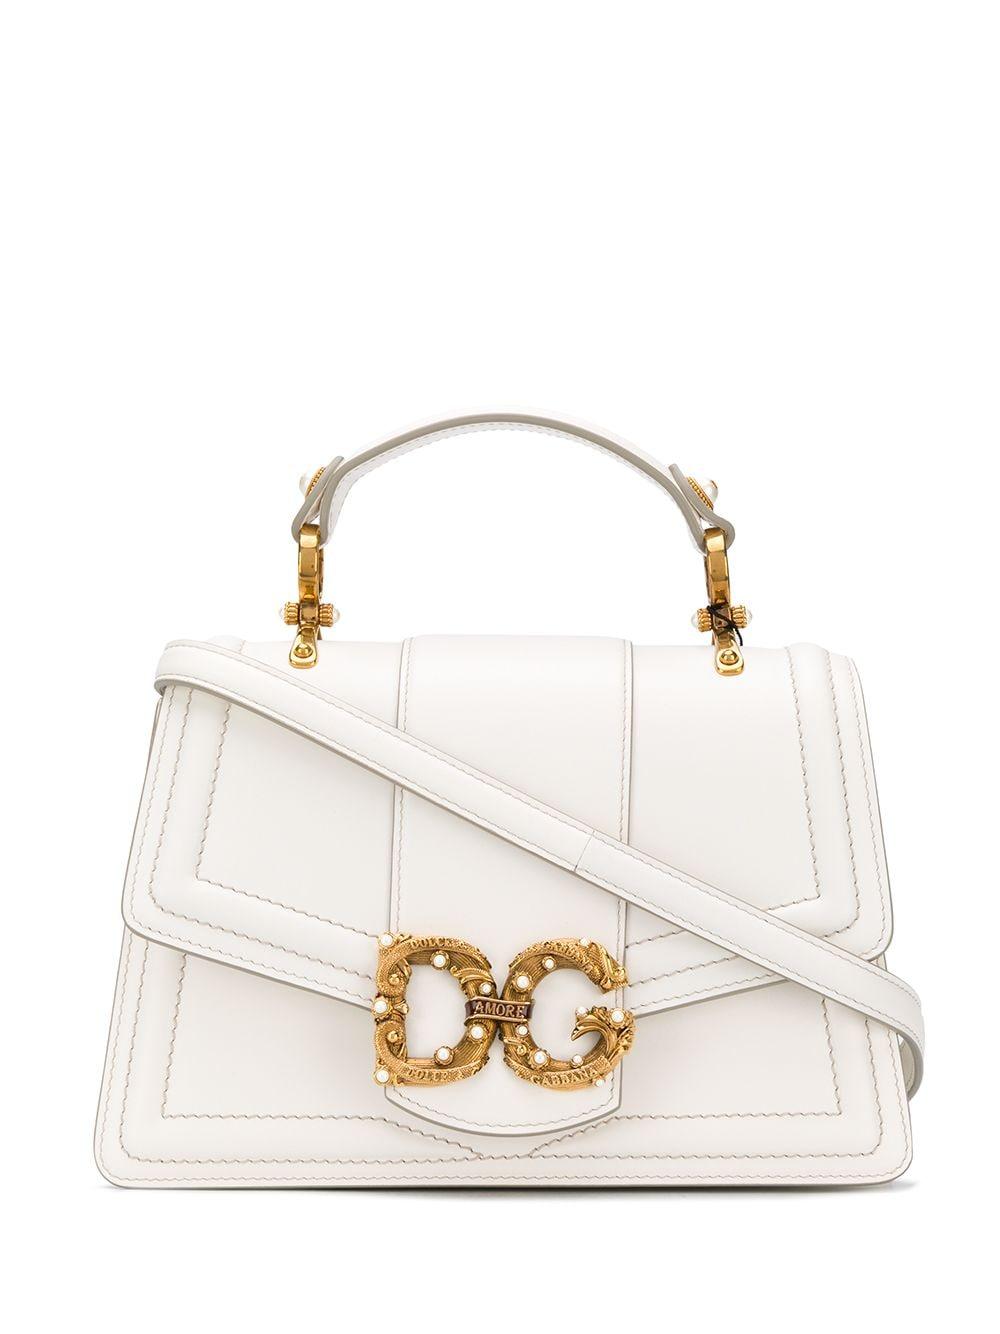 Dolce & Gabbana Small Dg Amore Bag In Calfskin in White | Lyst